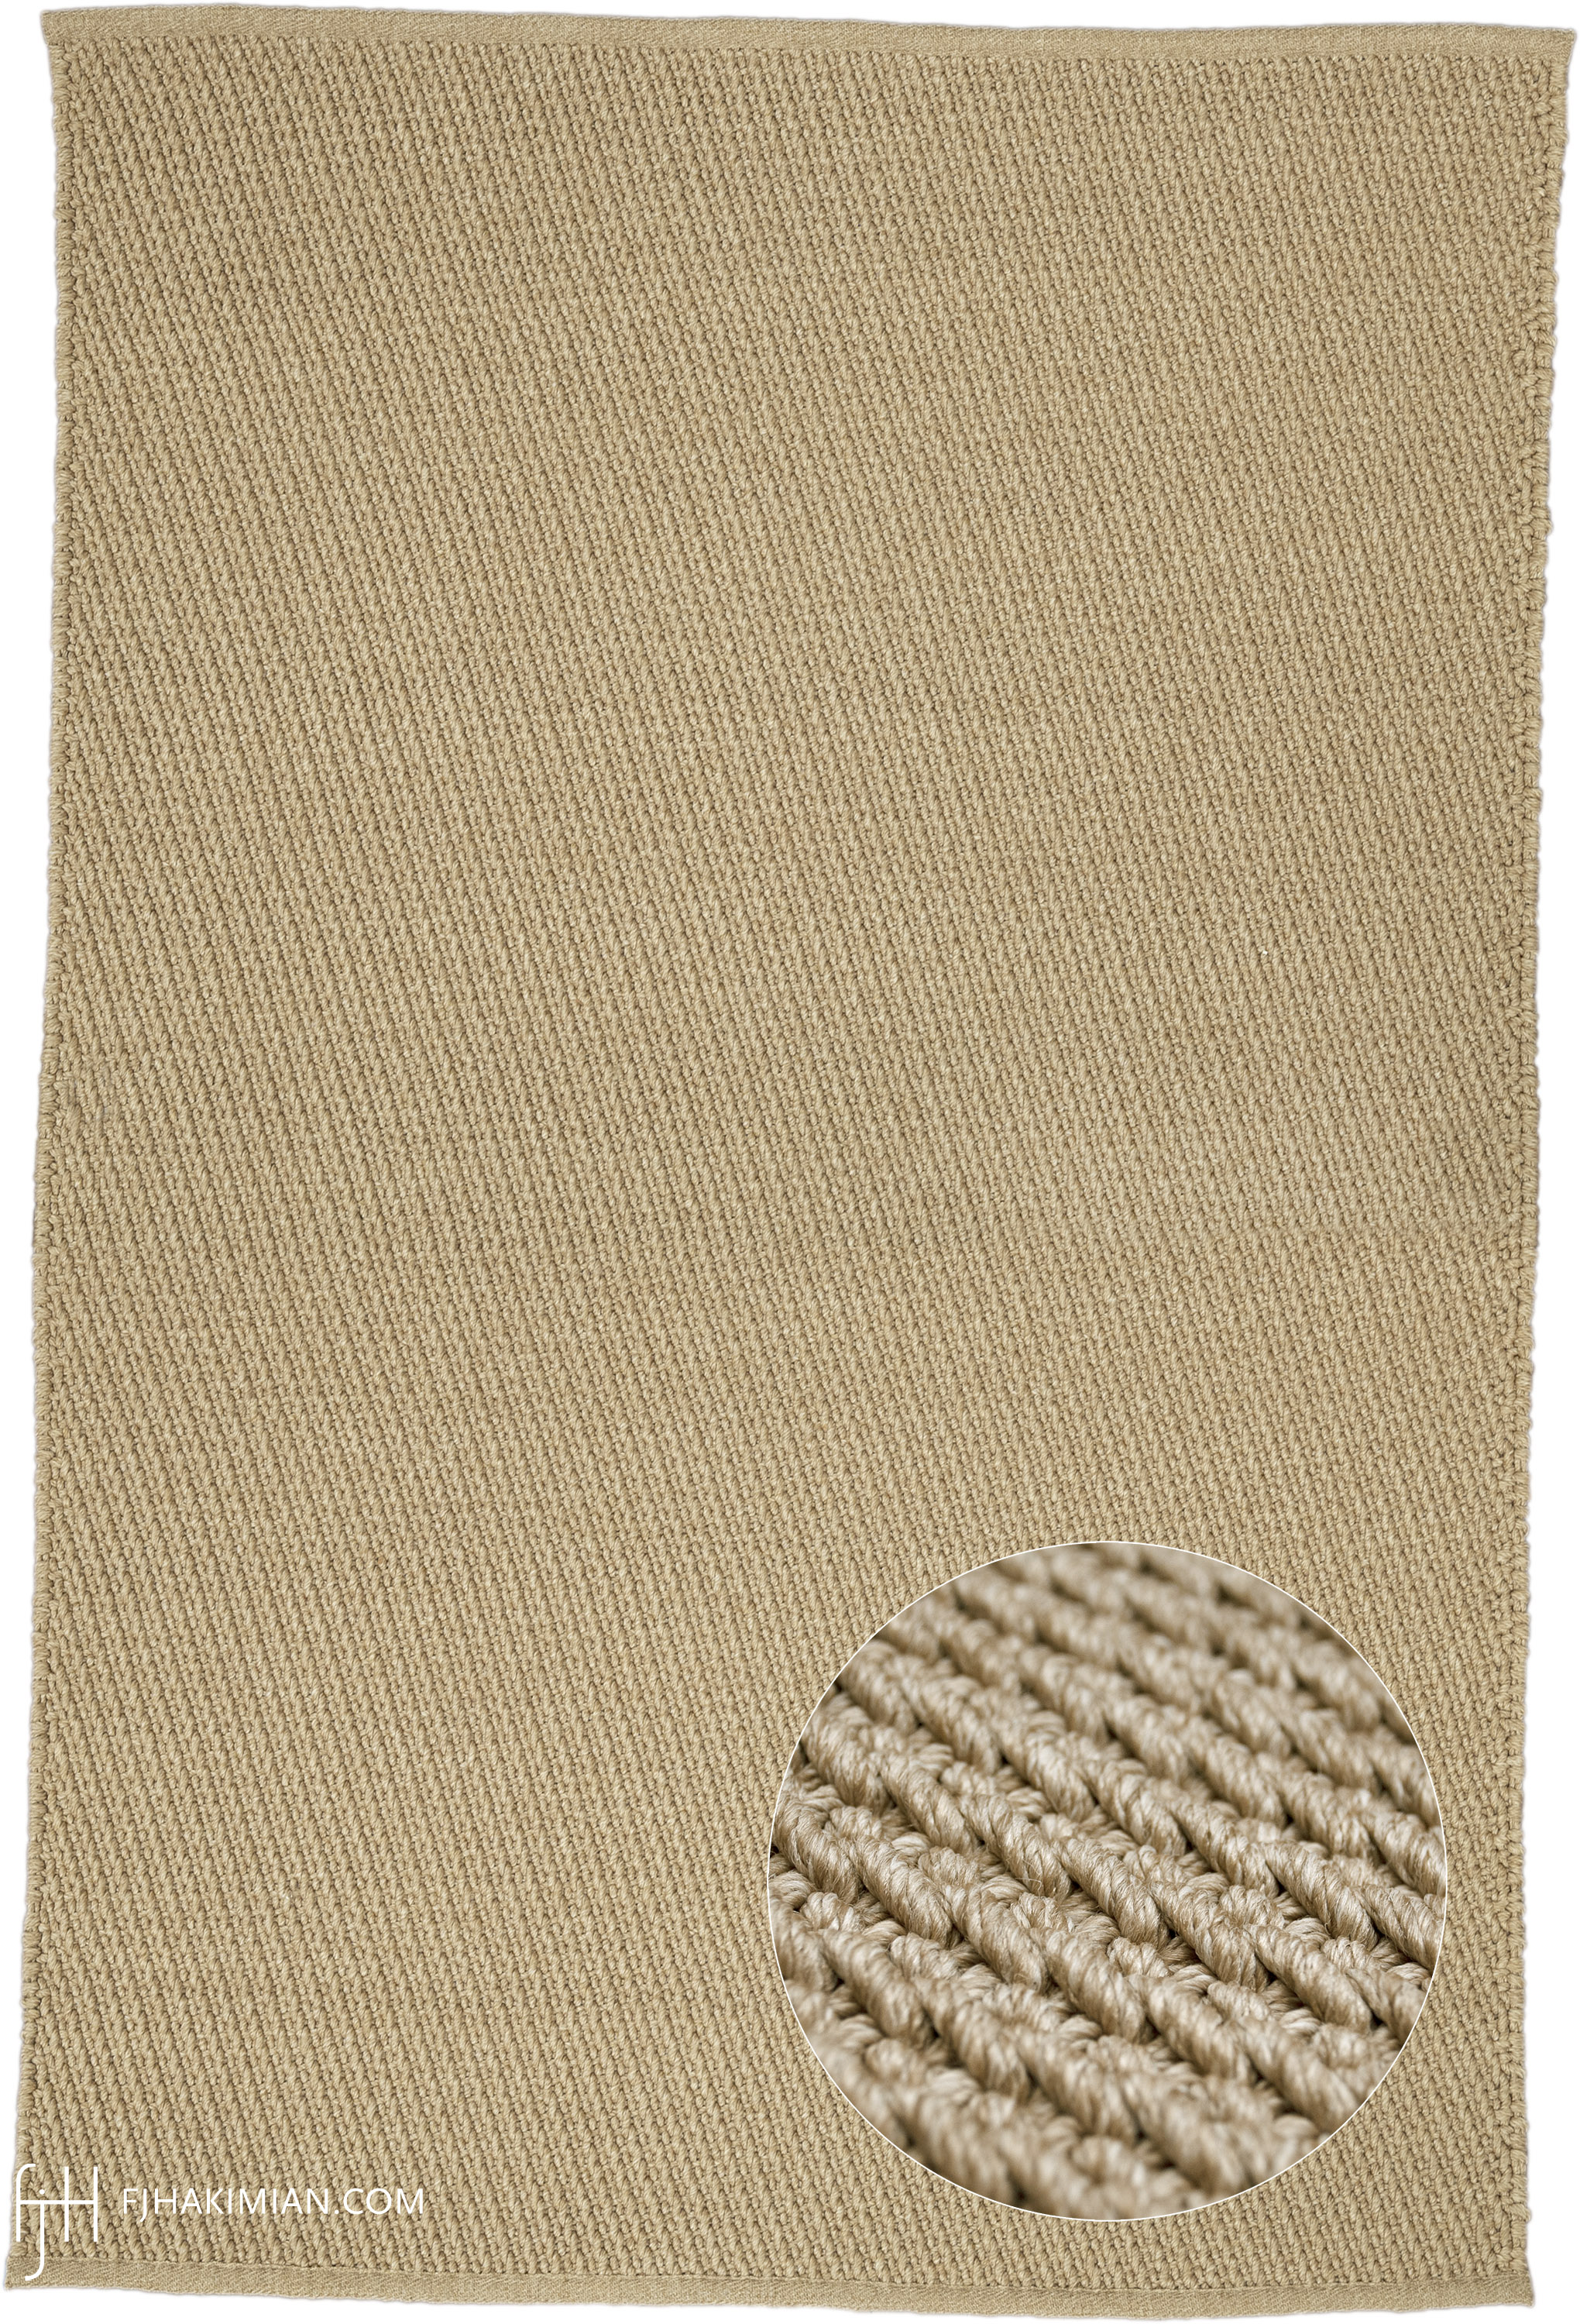 FC-Dominica Sand | Polypropylene | Custom Indoor & Outdoor Carpet | FJ Hakimian | Carpet Gallery in NYC